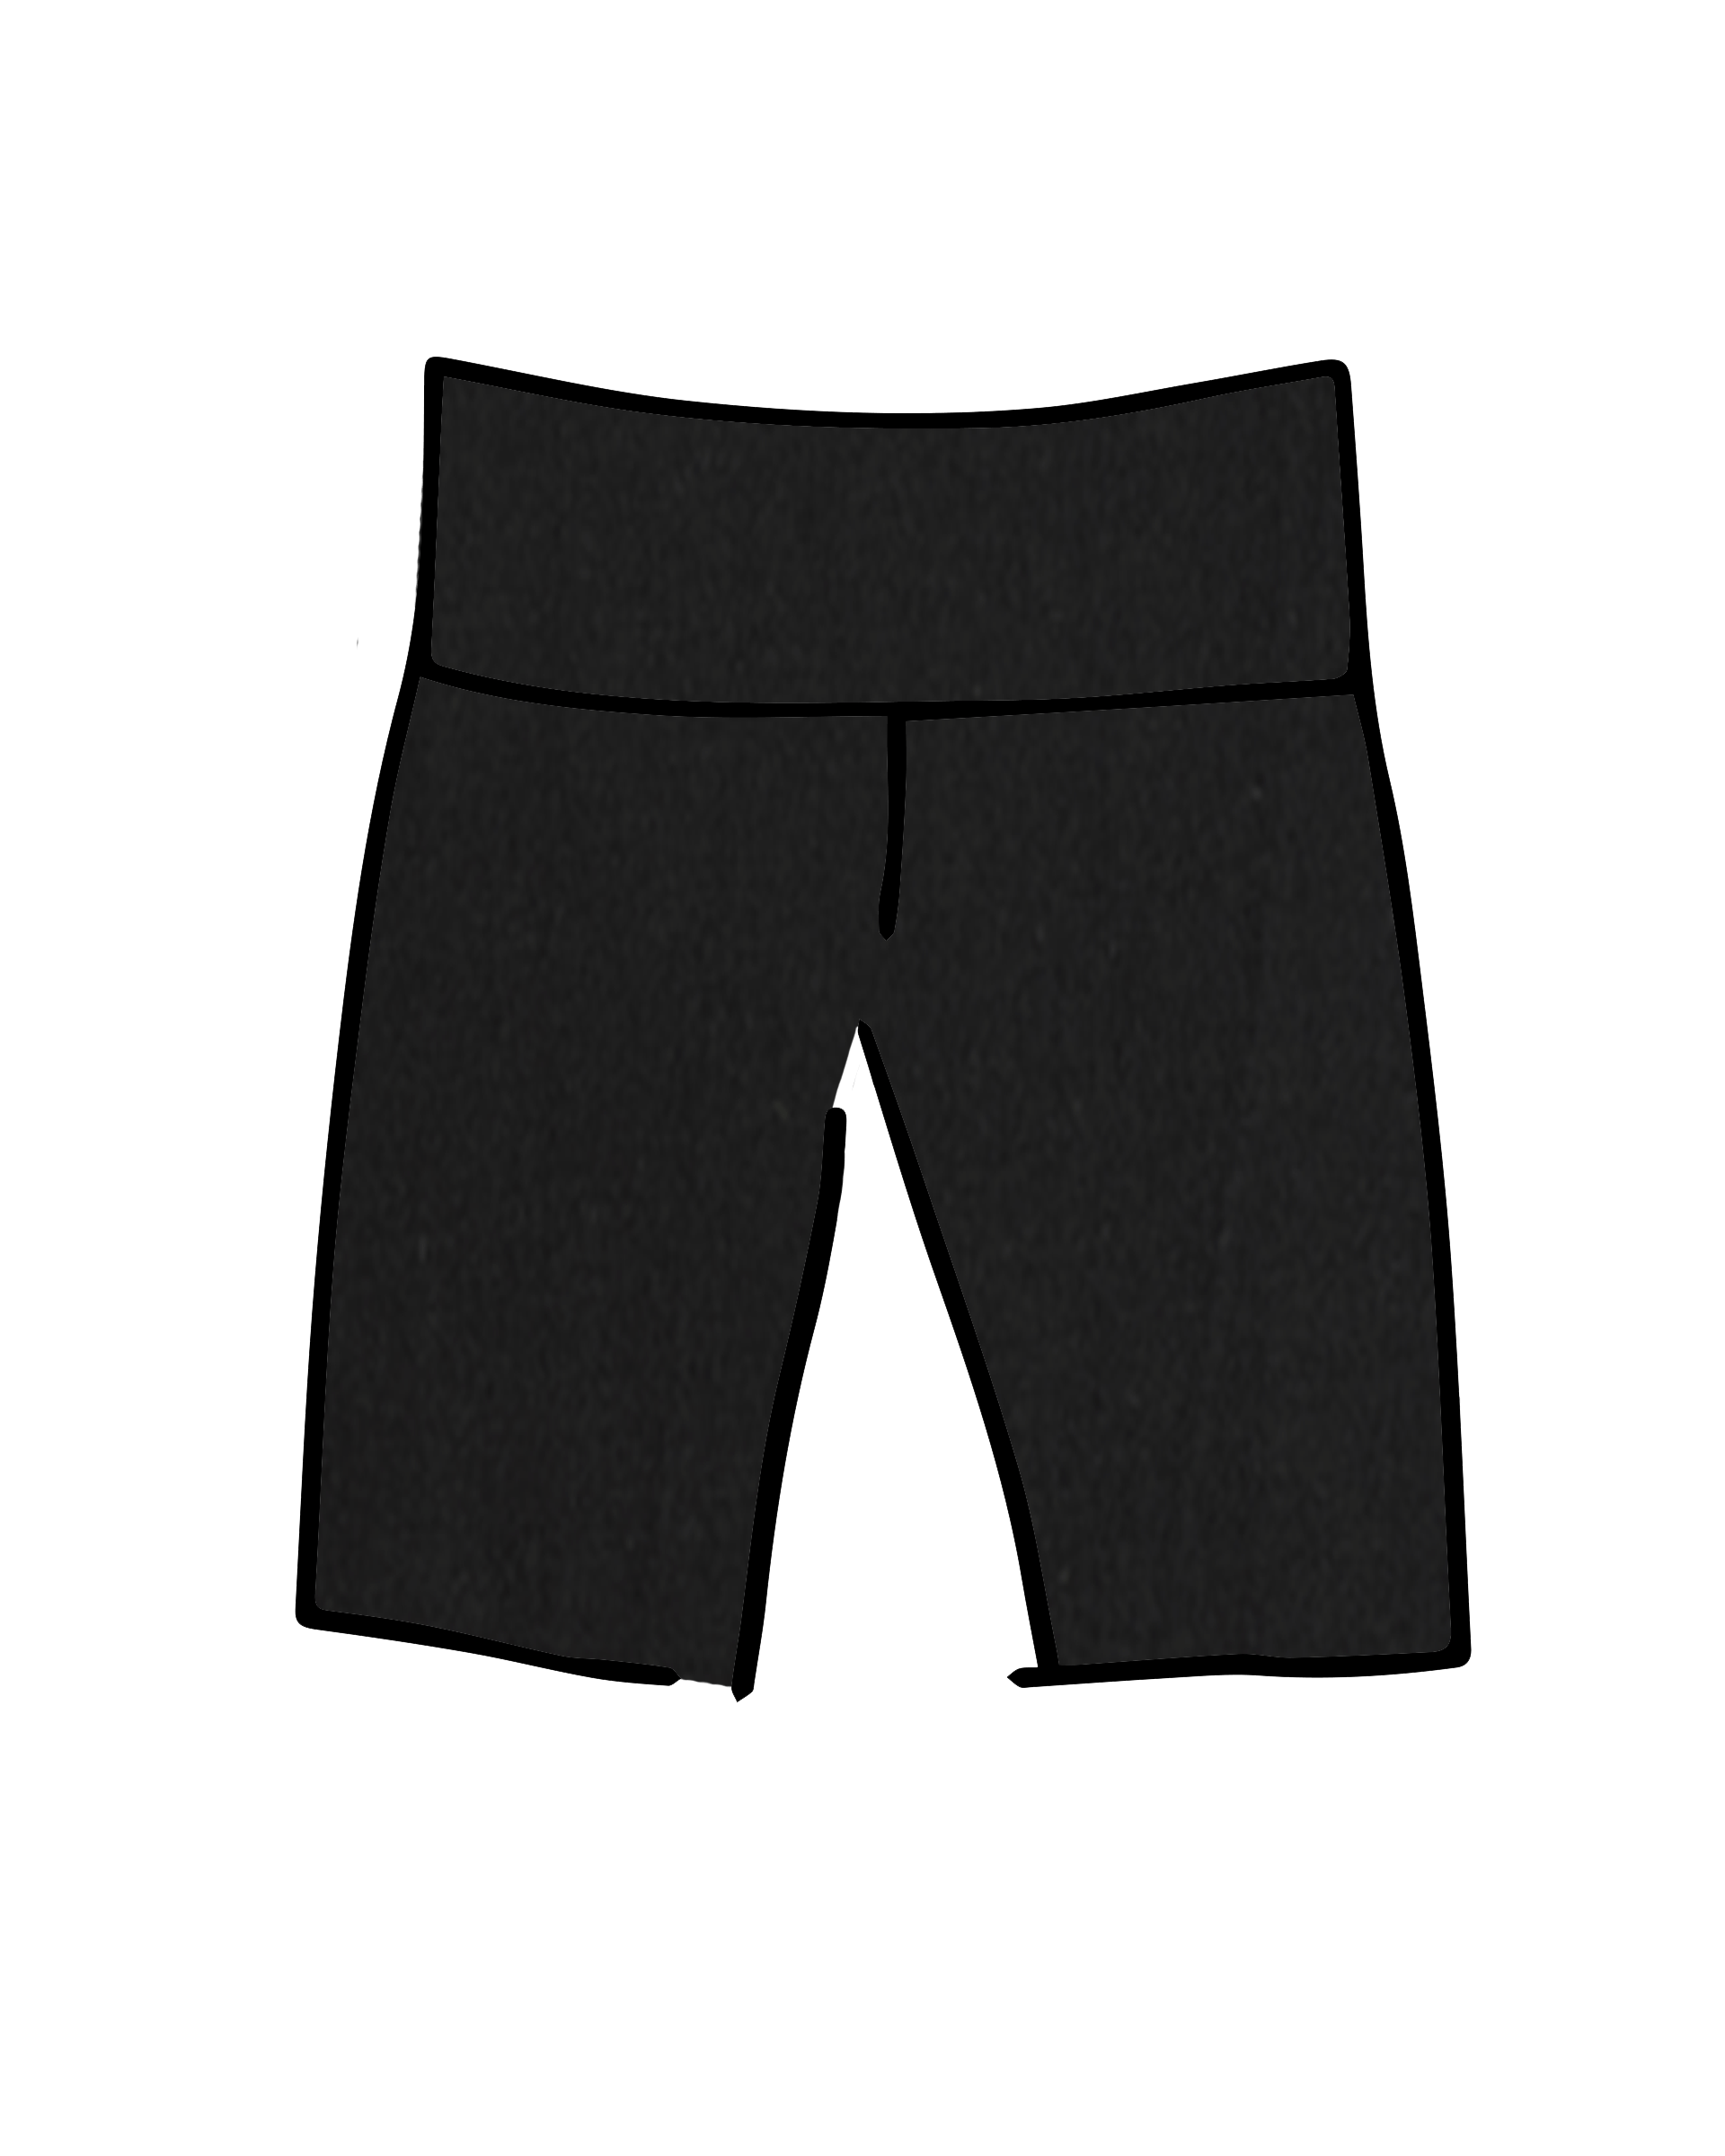 Drawing of Thunderpants Bike Shorts in Plain Black.